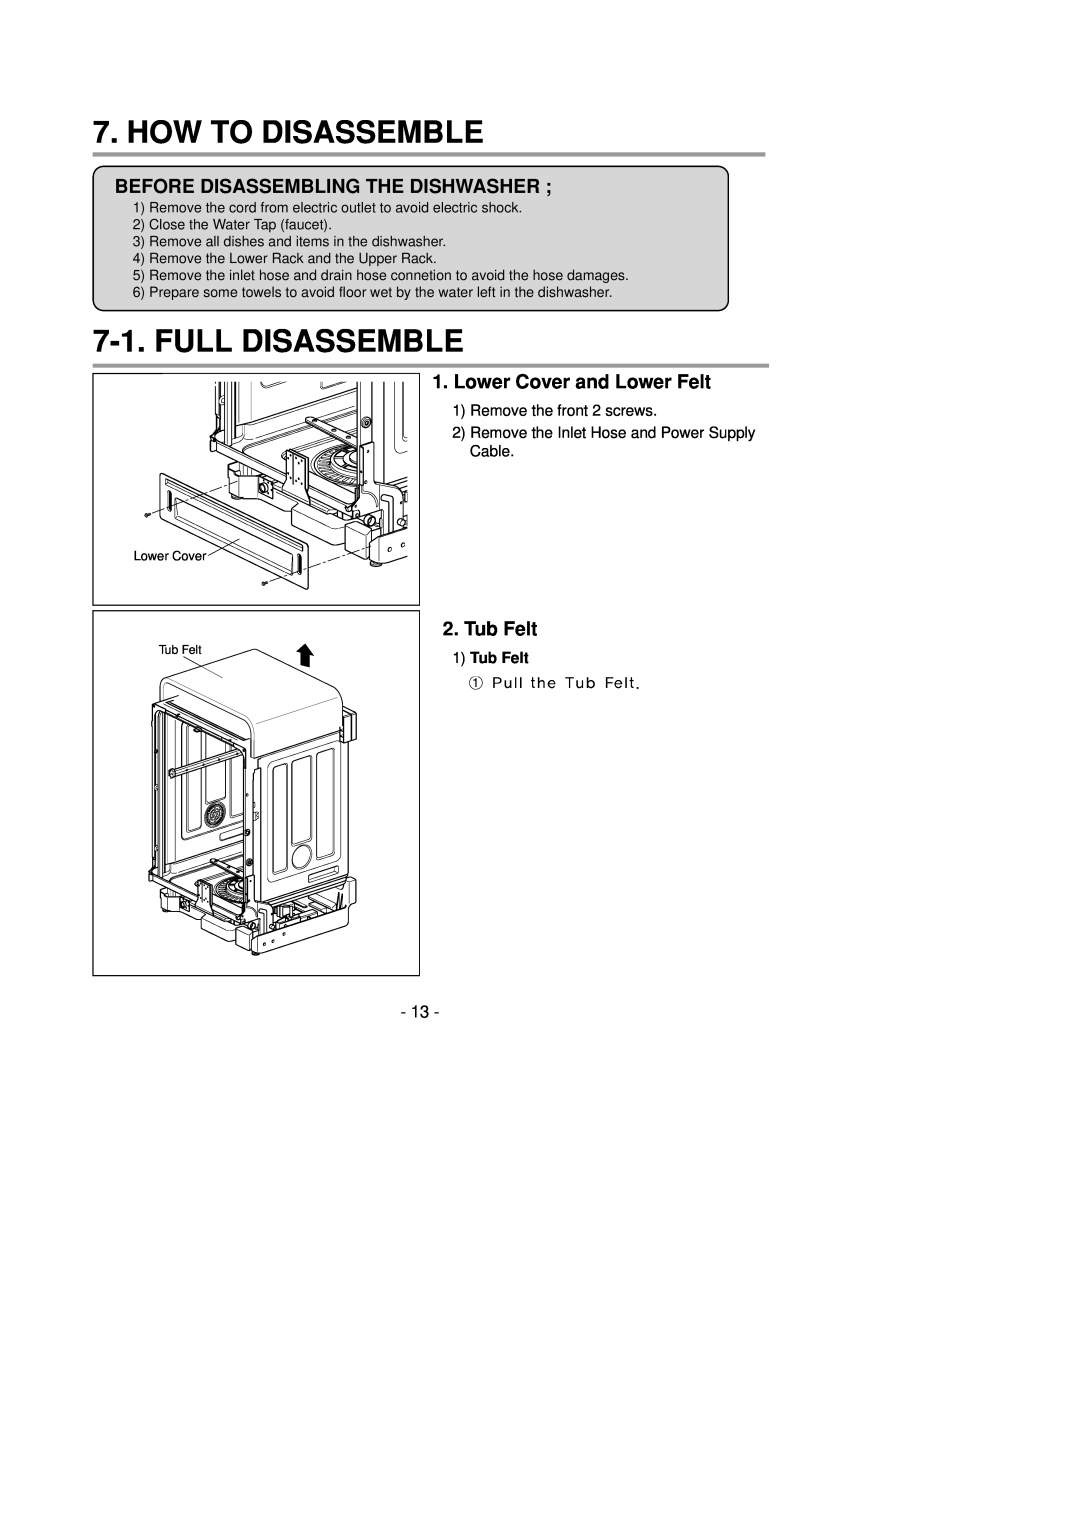 LG Electronics LDS4821(WW How To Disassemble, Full Disassemble, Before Disassembling The Dishwasher, 1Tub Felt 